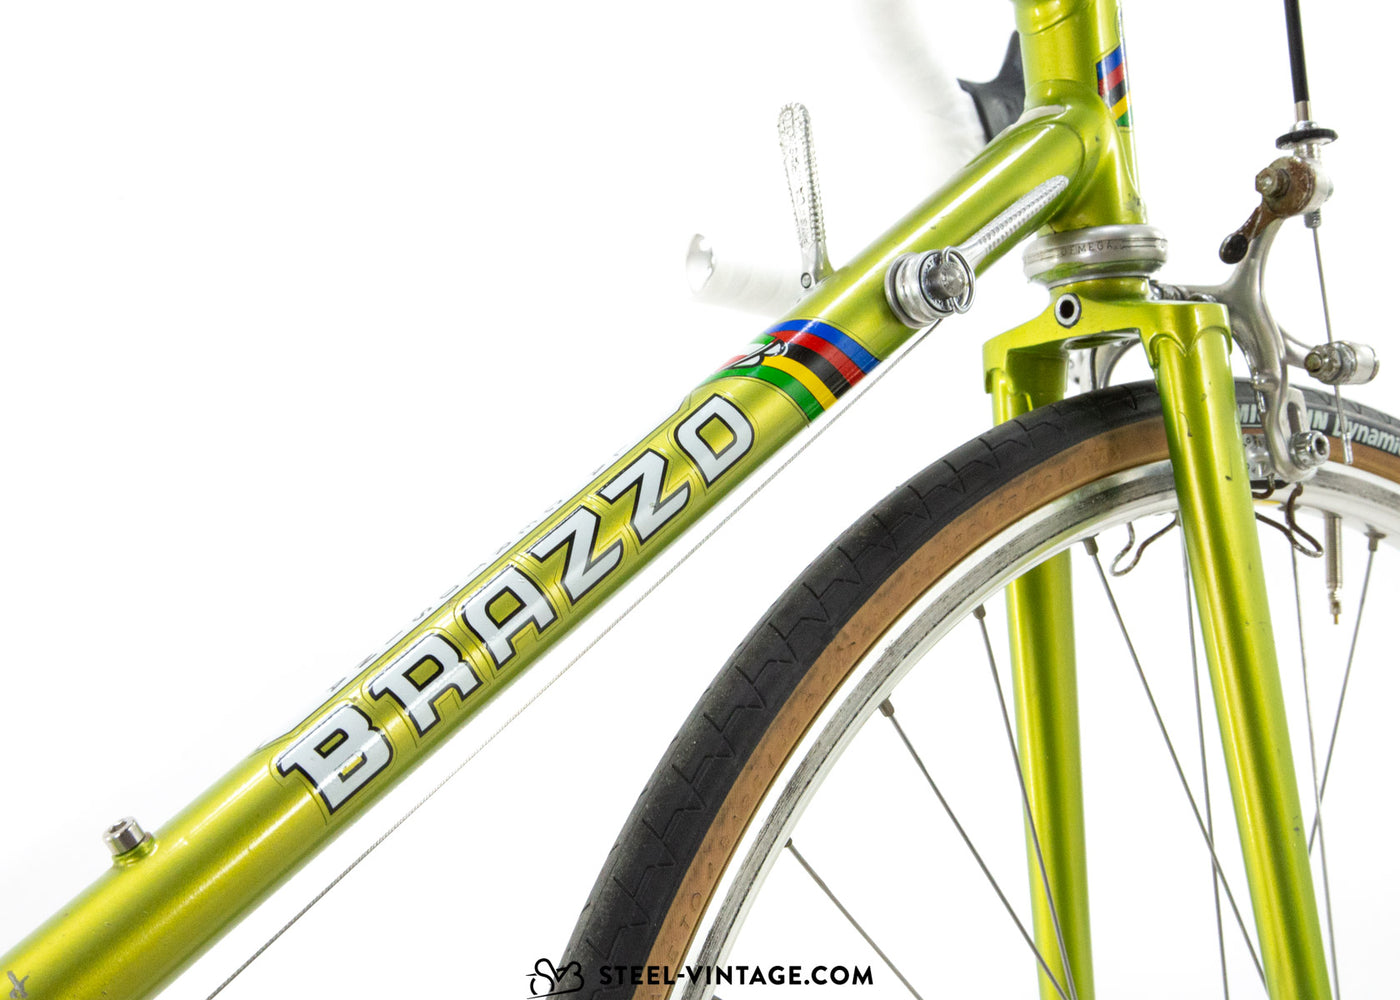 Brazzo Speciali Corsa Road Bicycle 1970s